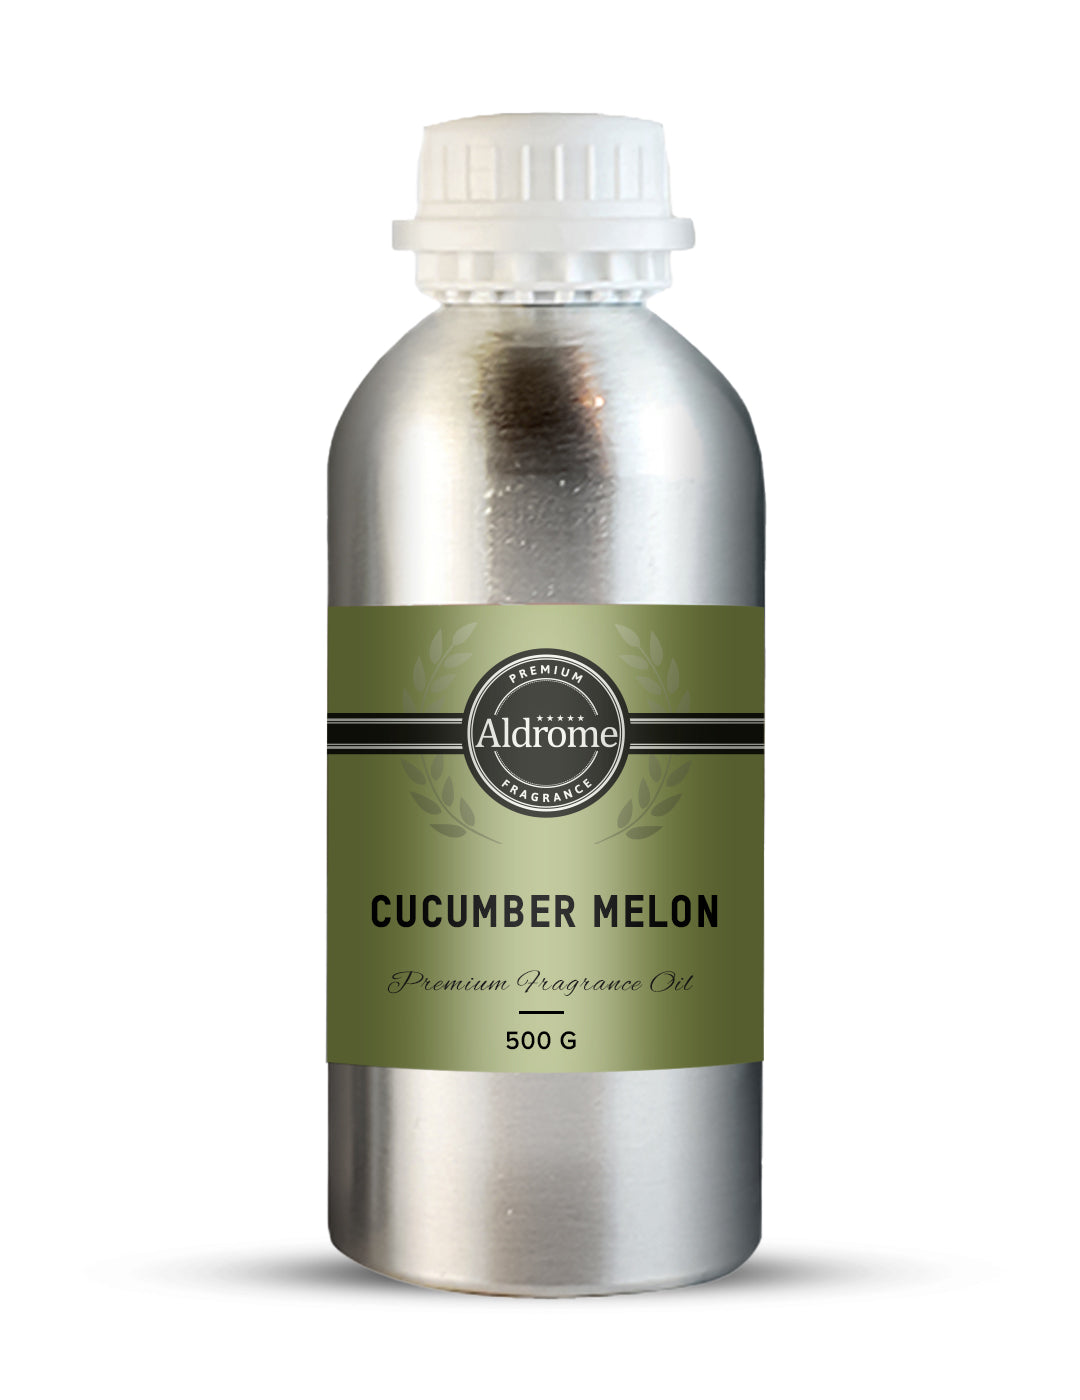 Cucumber Melon Fragrance Oil - 500 G | Buy Cucumber Melon Fragrance Oil | Aldrome Premium Fragrance Oil